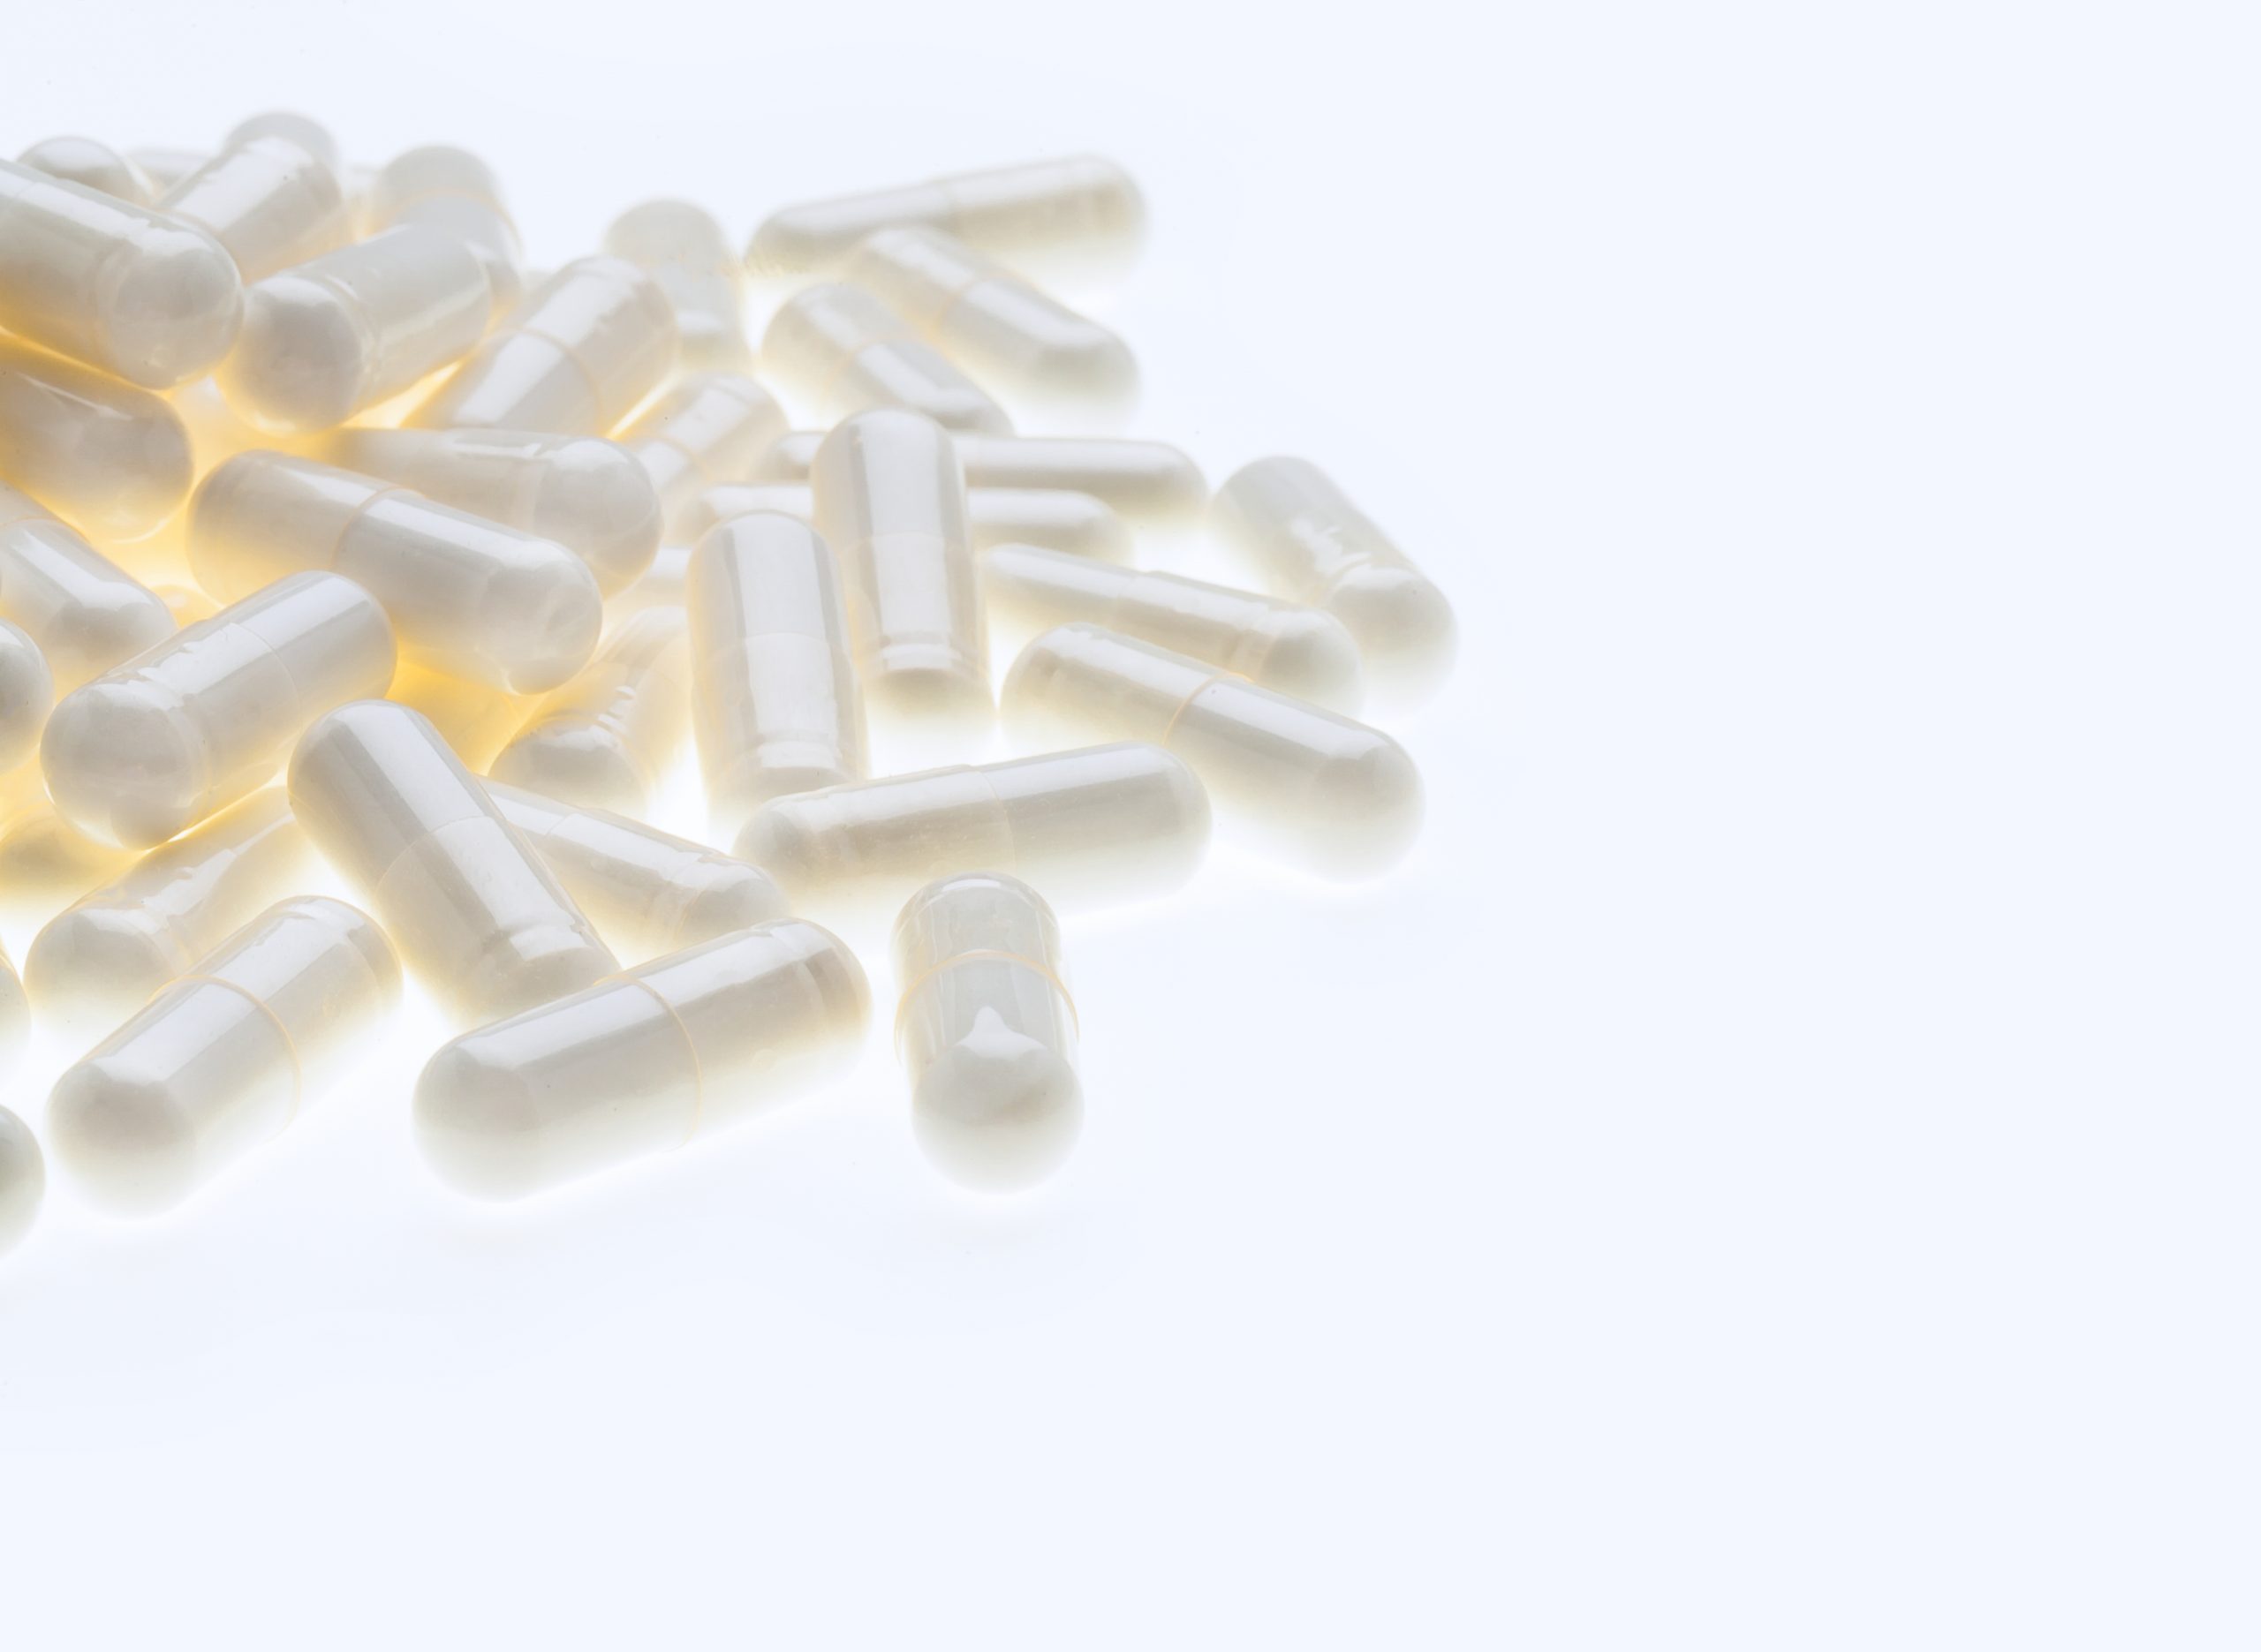 High-strength wholesale probiotics